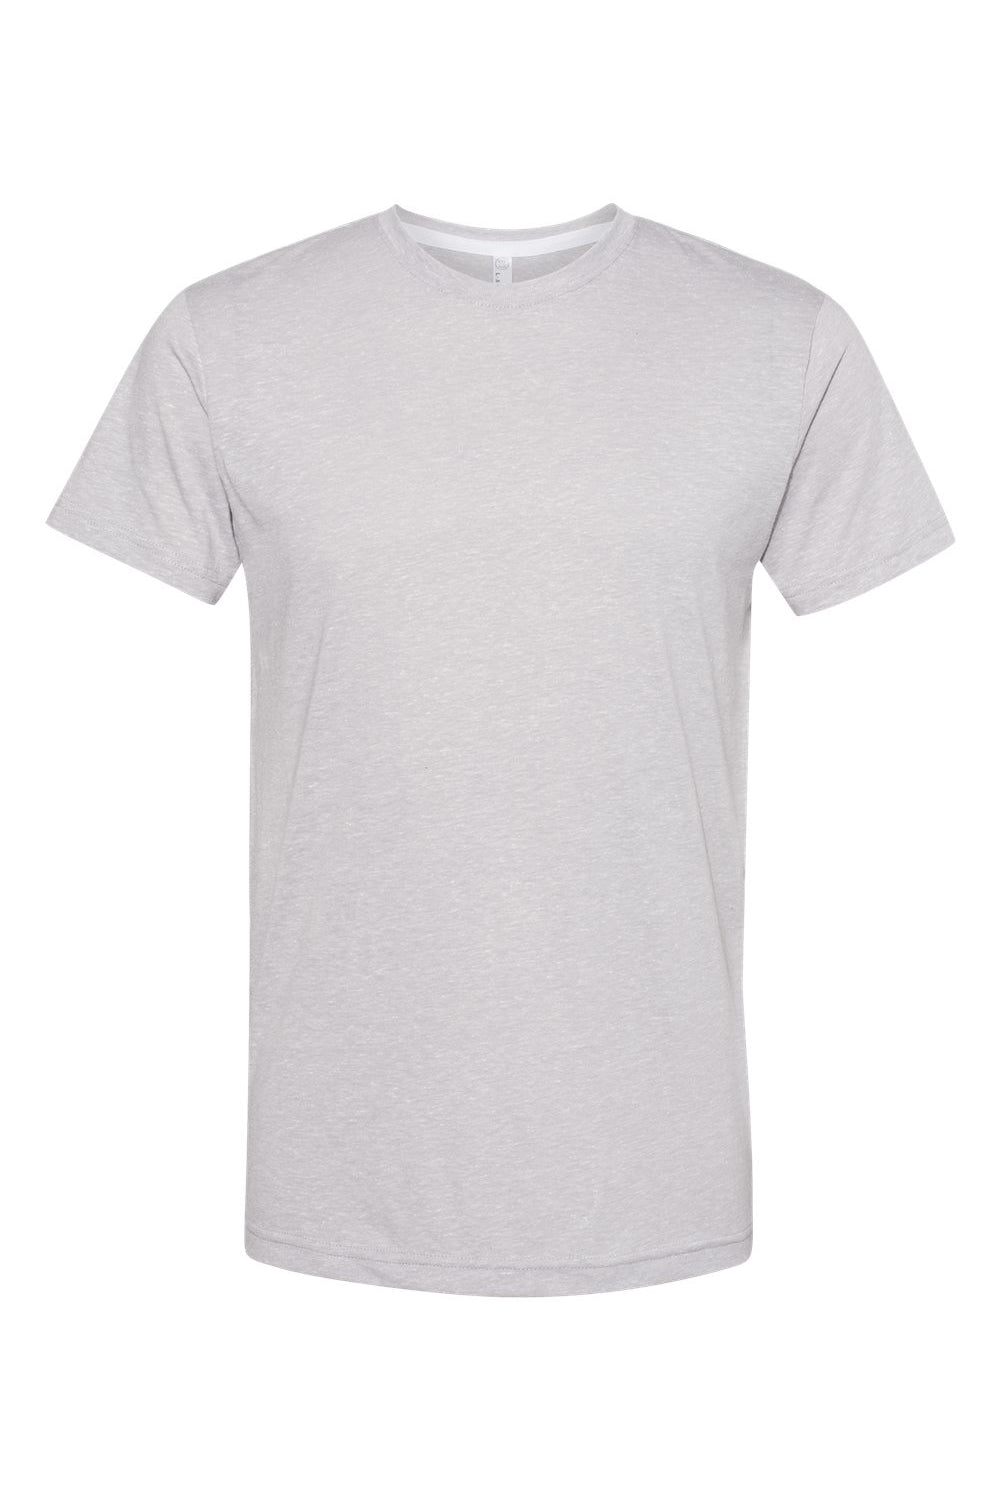 LAT 6991 Mens Harborside Melange Short Sleeve Crewneck T-Shirt Grey Flat Front